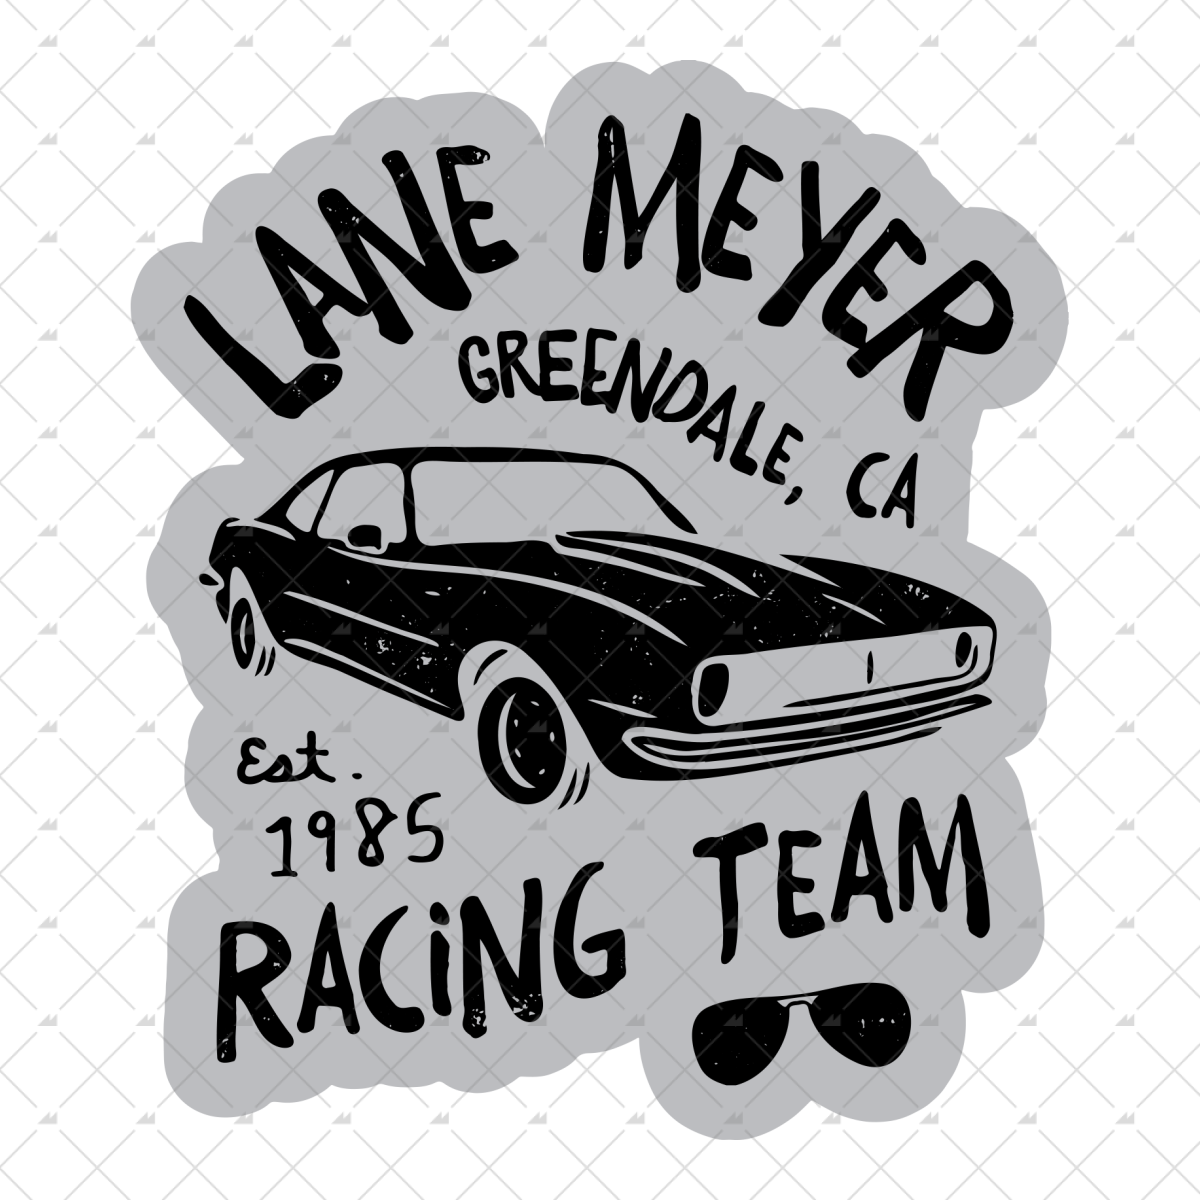 Lane Meyer Racing Team - Sticker